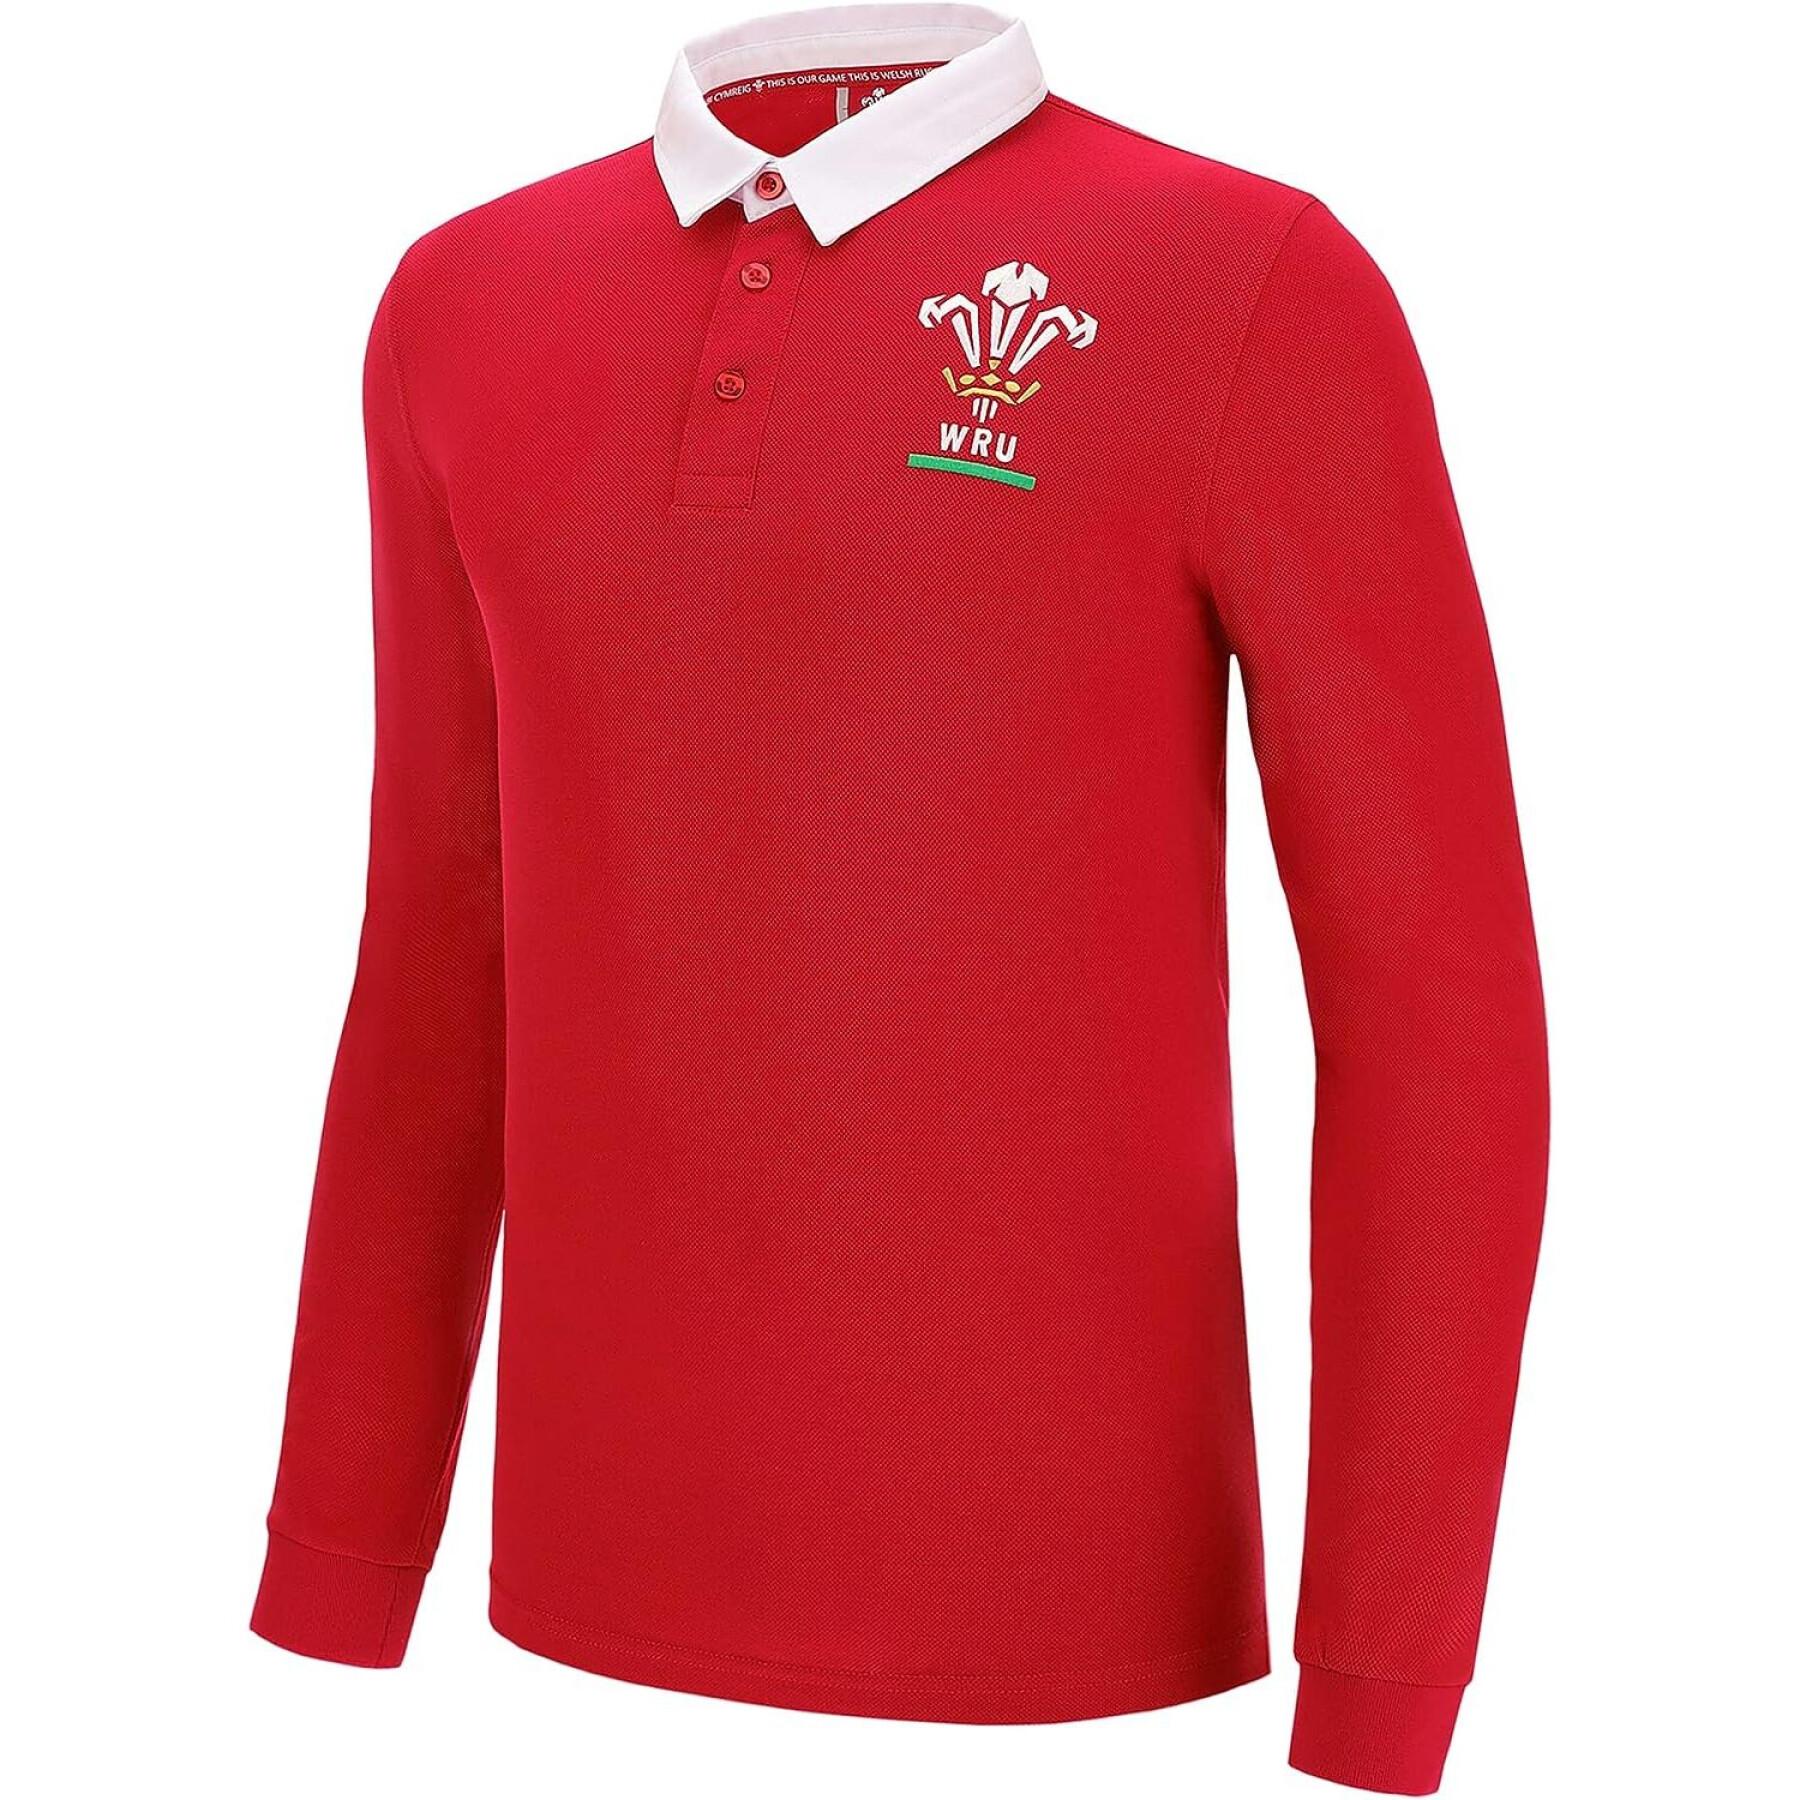 Long sleeve jersey Pays de Galles Rugby XV Merch CA